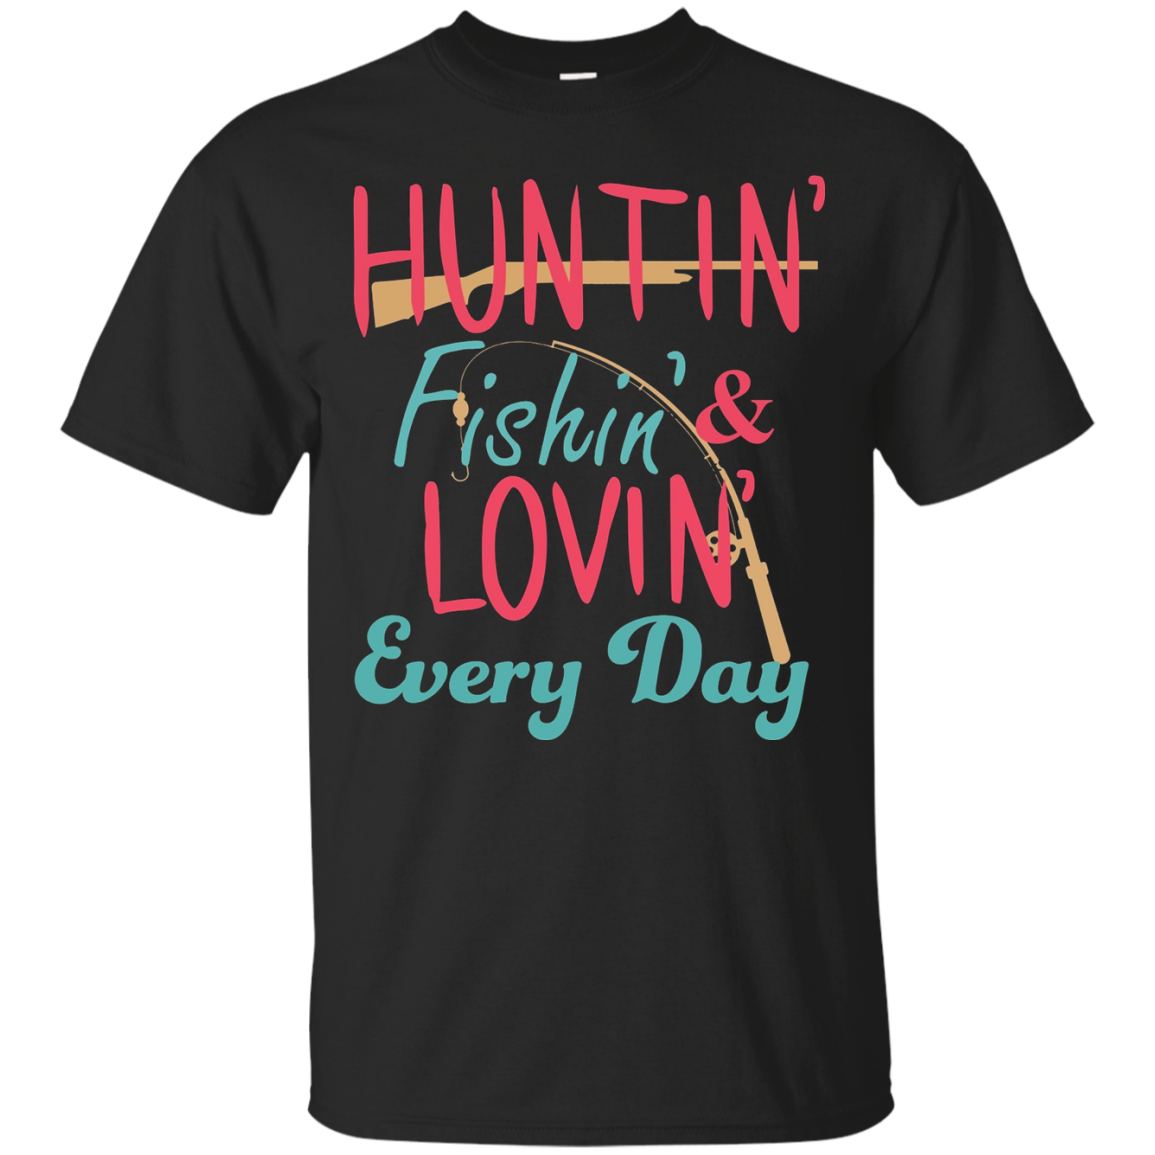 Hunting, fishing & loving every day t-shirt